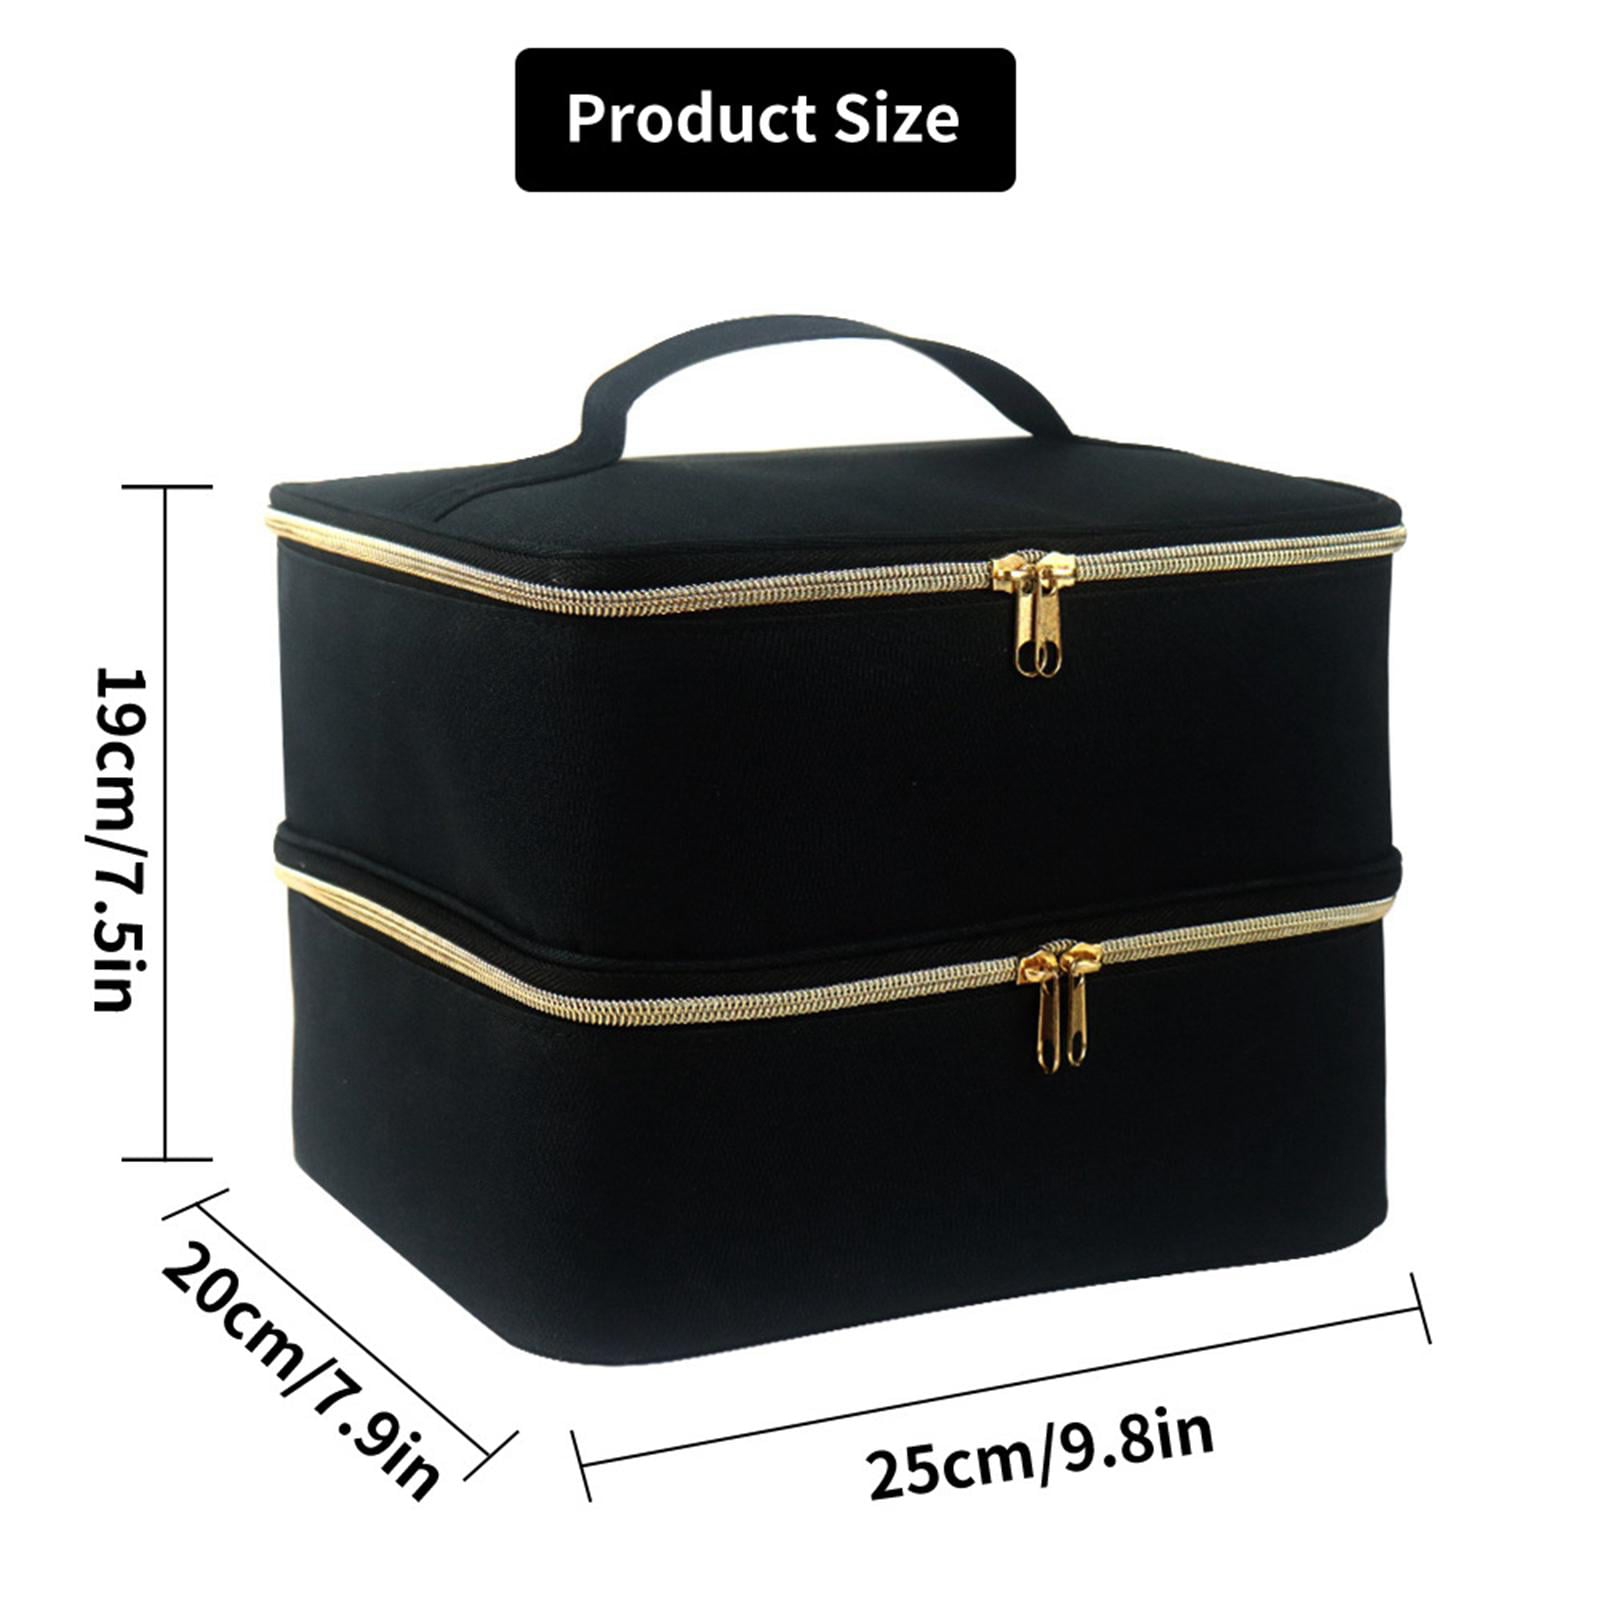 AFUOWER Nail Polish Organizer Bag with Handles Travel Case Portable Storage Bag for Manicure Set - Holds 30 Bottles(15ml - 0.6 fl.oz)